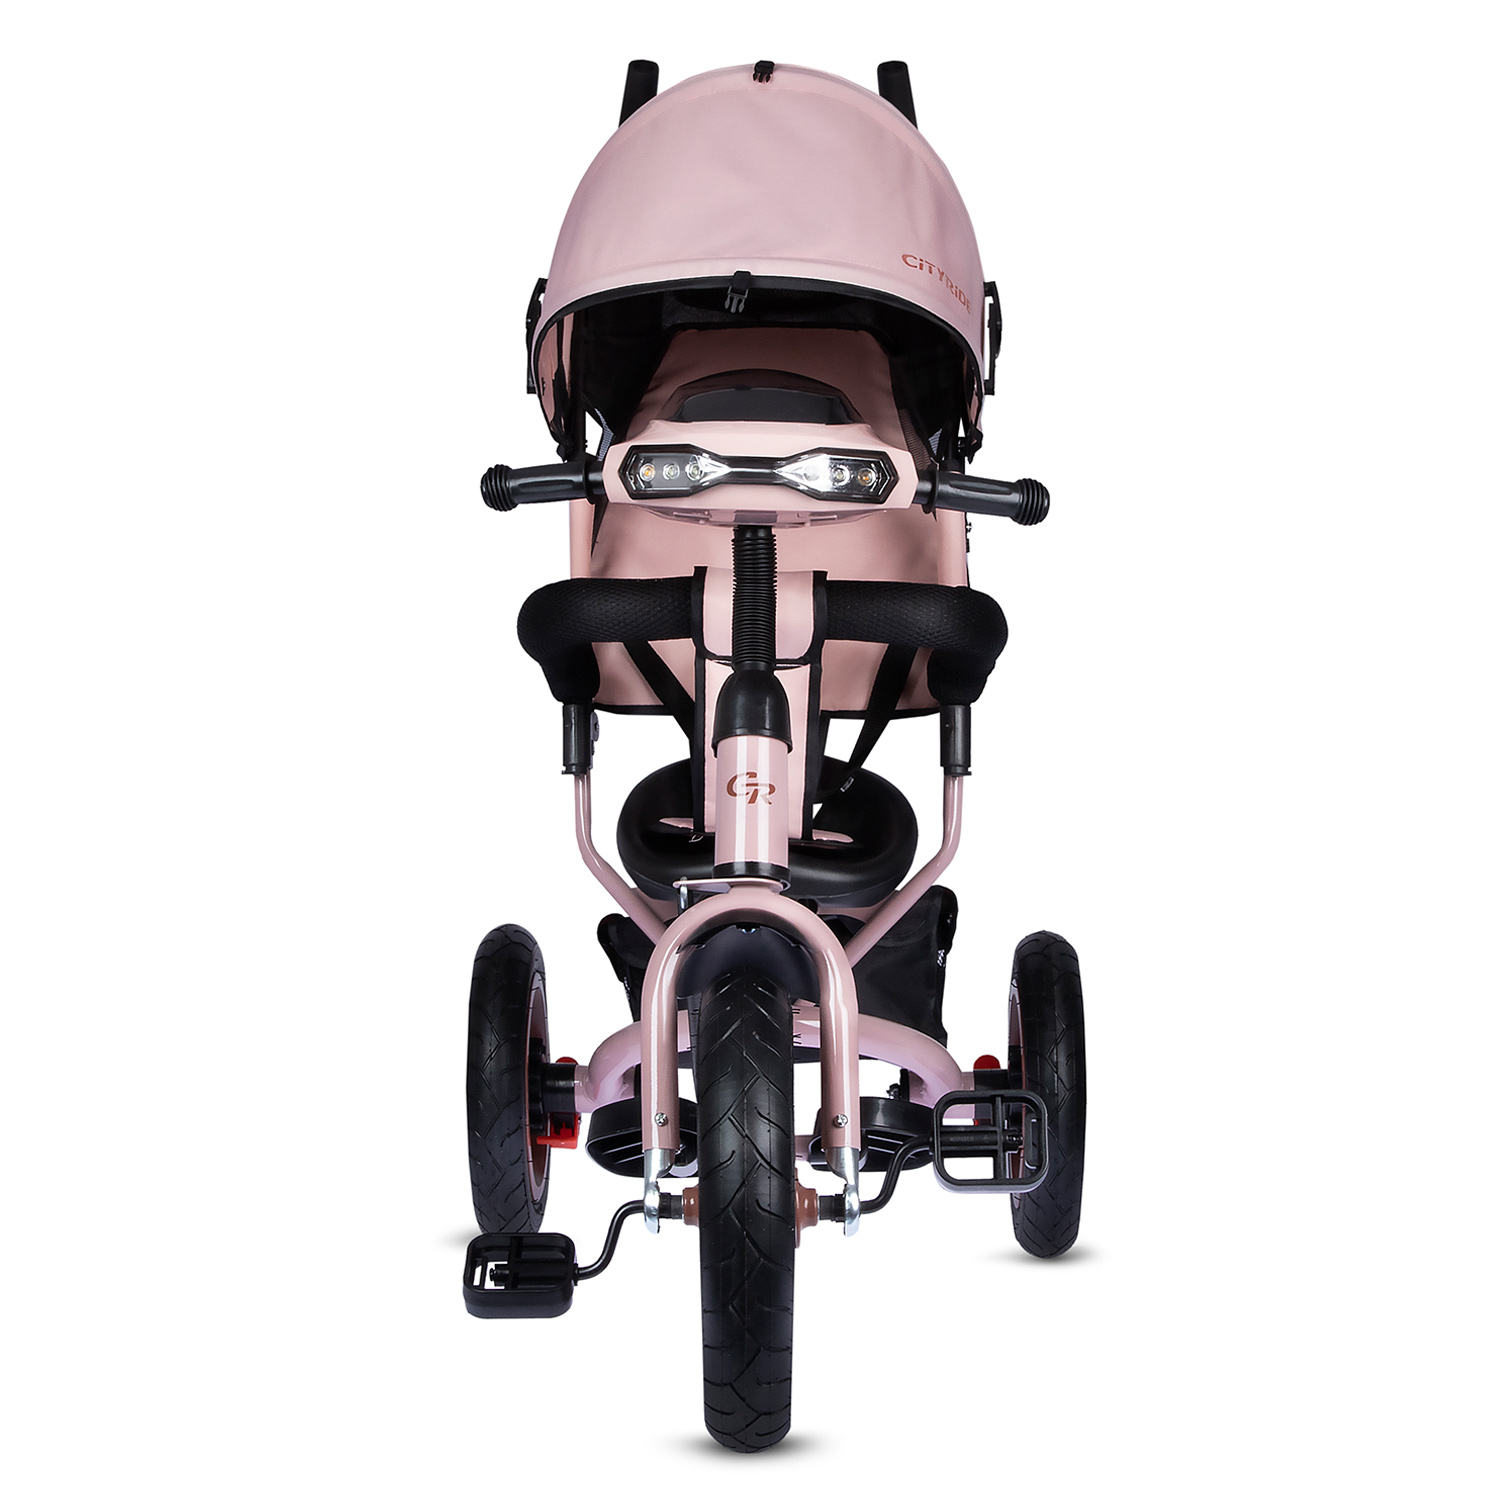 Велосипед City-Ride 3-х кол., розовый, колеса надув 12/10, сид не поворот,бампер ,фара